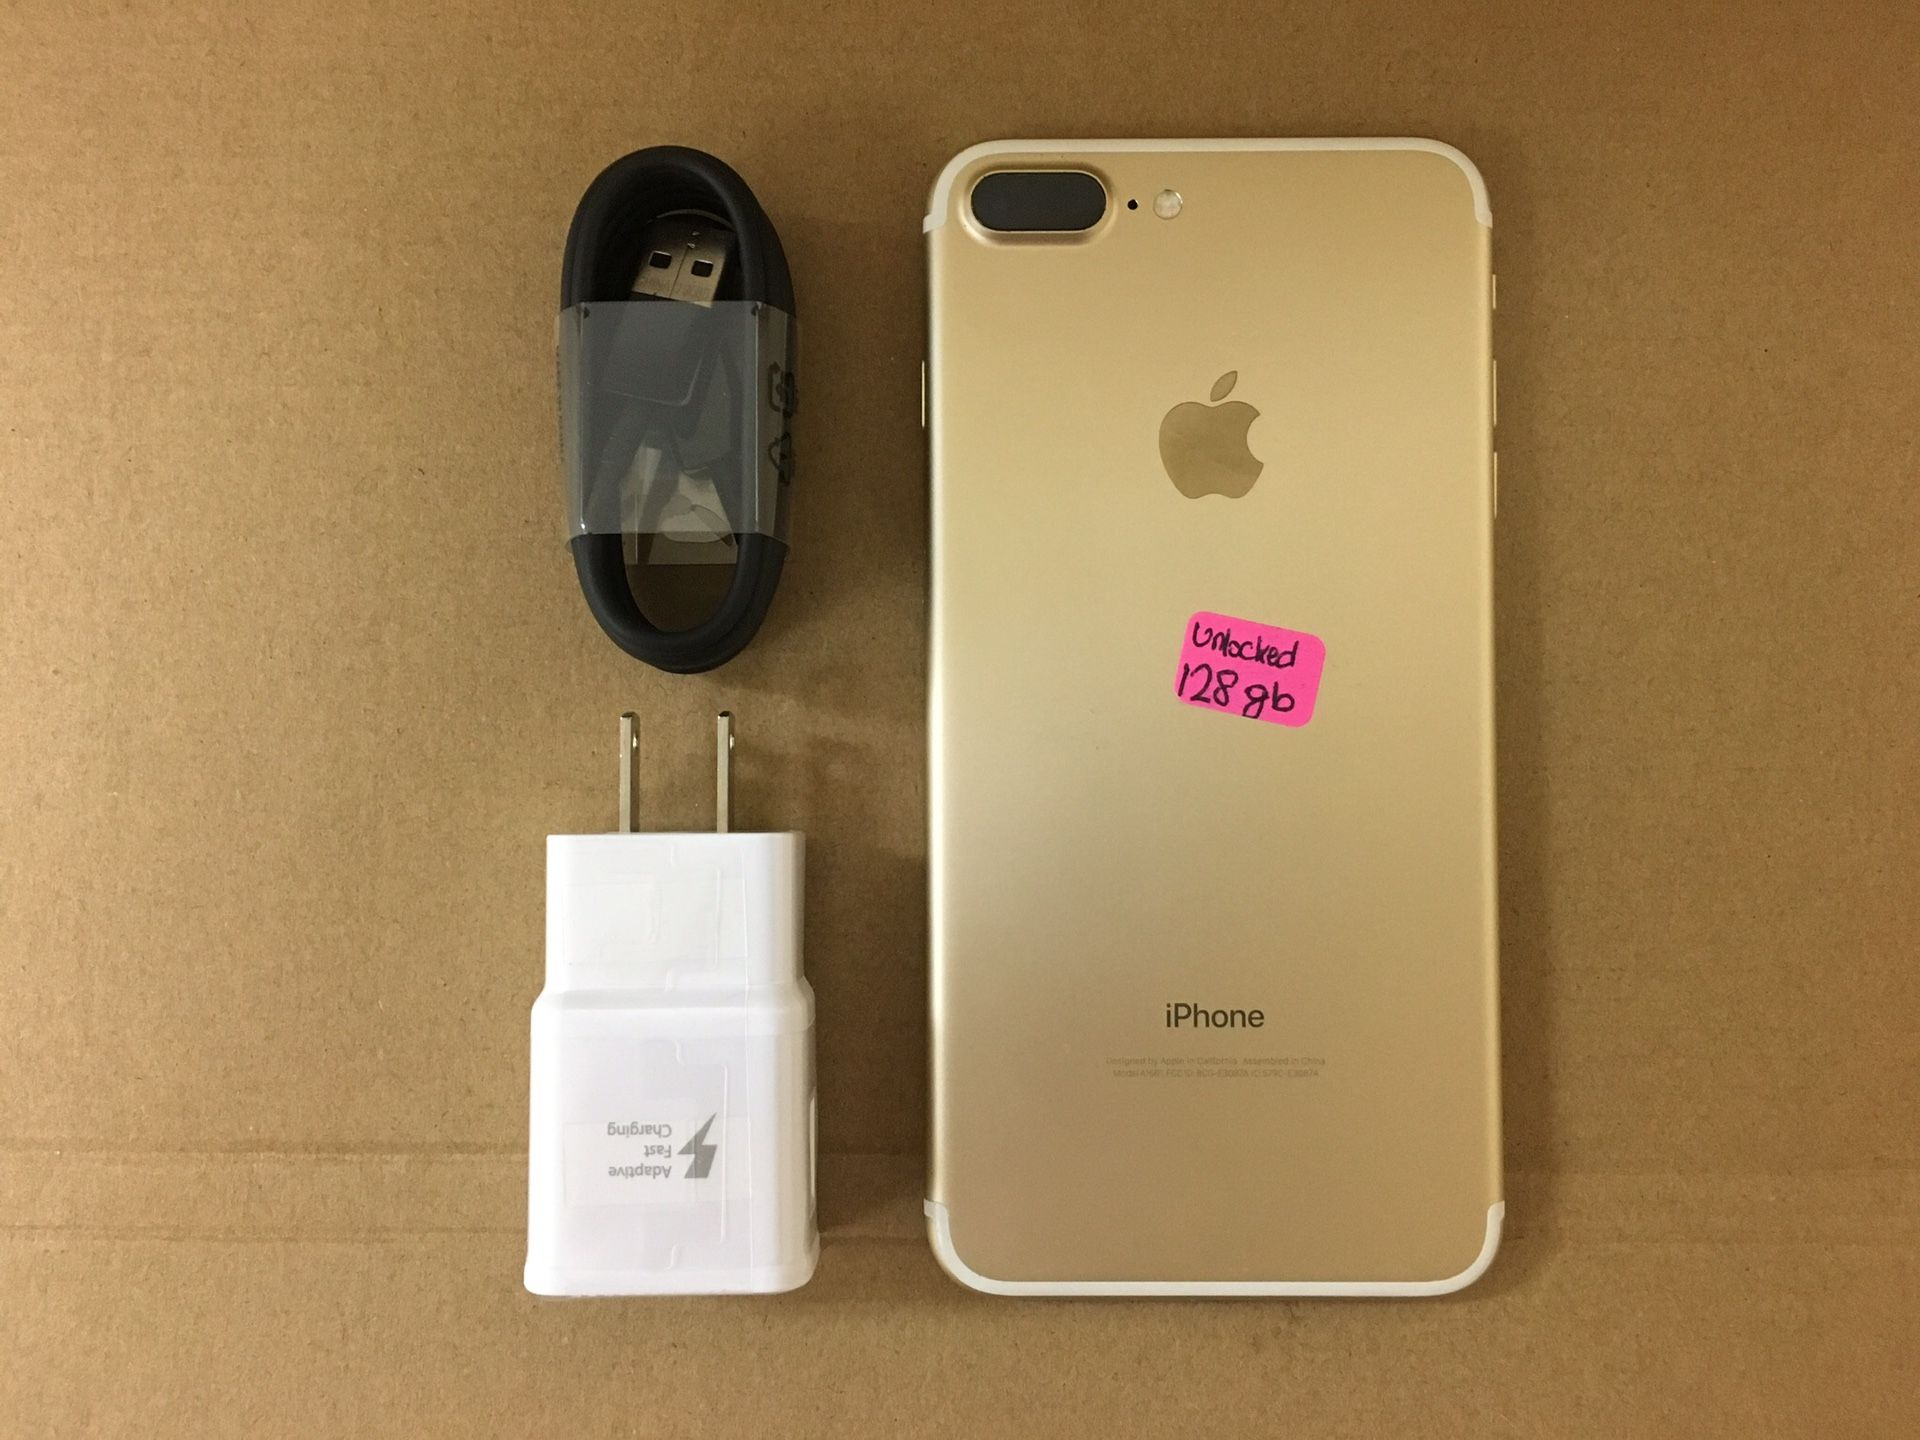 iPhone 7 Plus 128gb factory unlocked, iphone AT&T, T-Mobile,Cricket Metro pcs, Verizon, Straight talk Simple mobile, unlocked, iphone